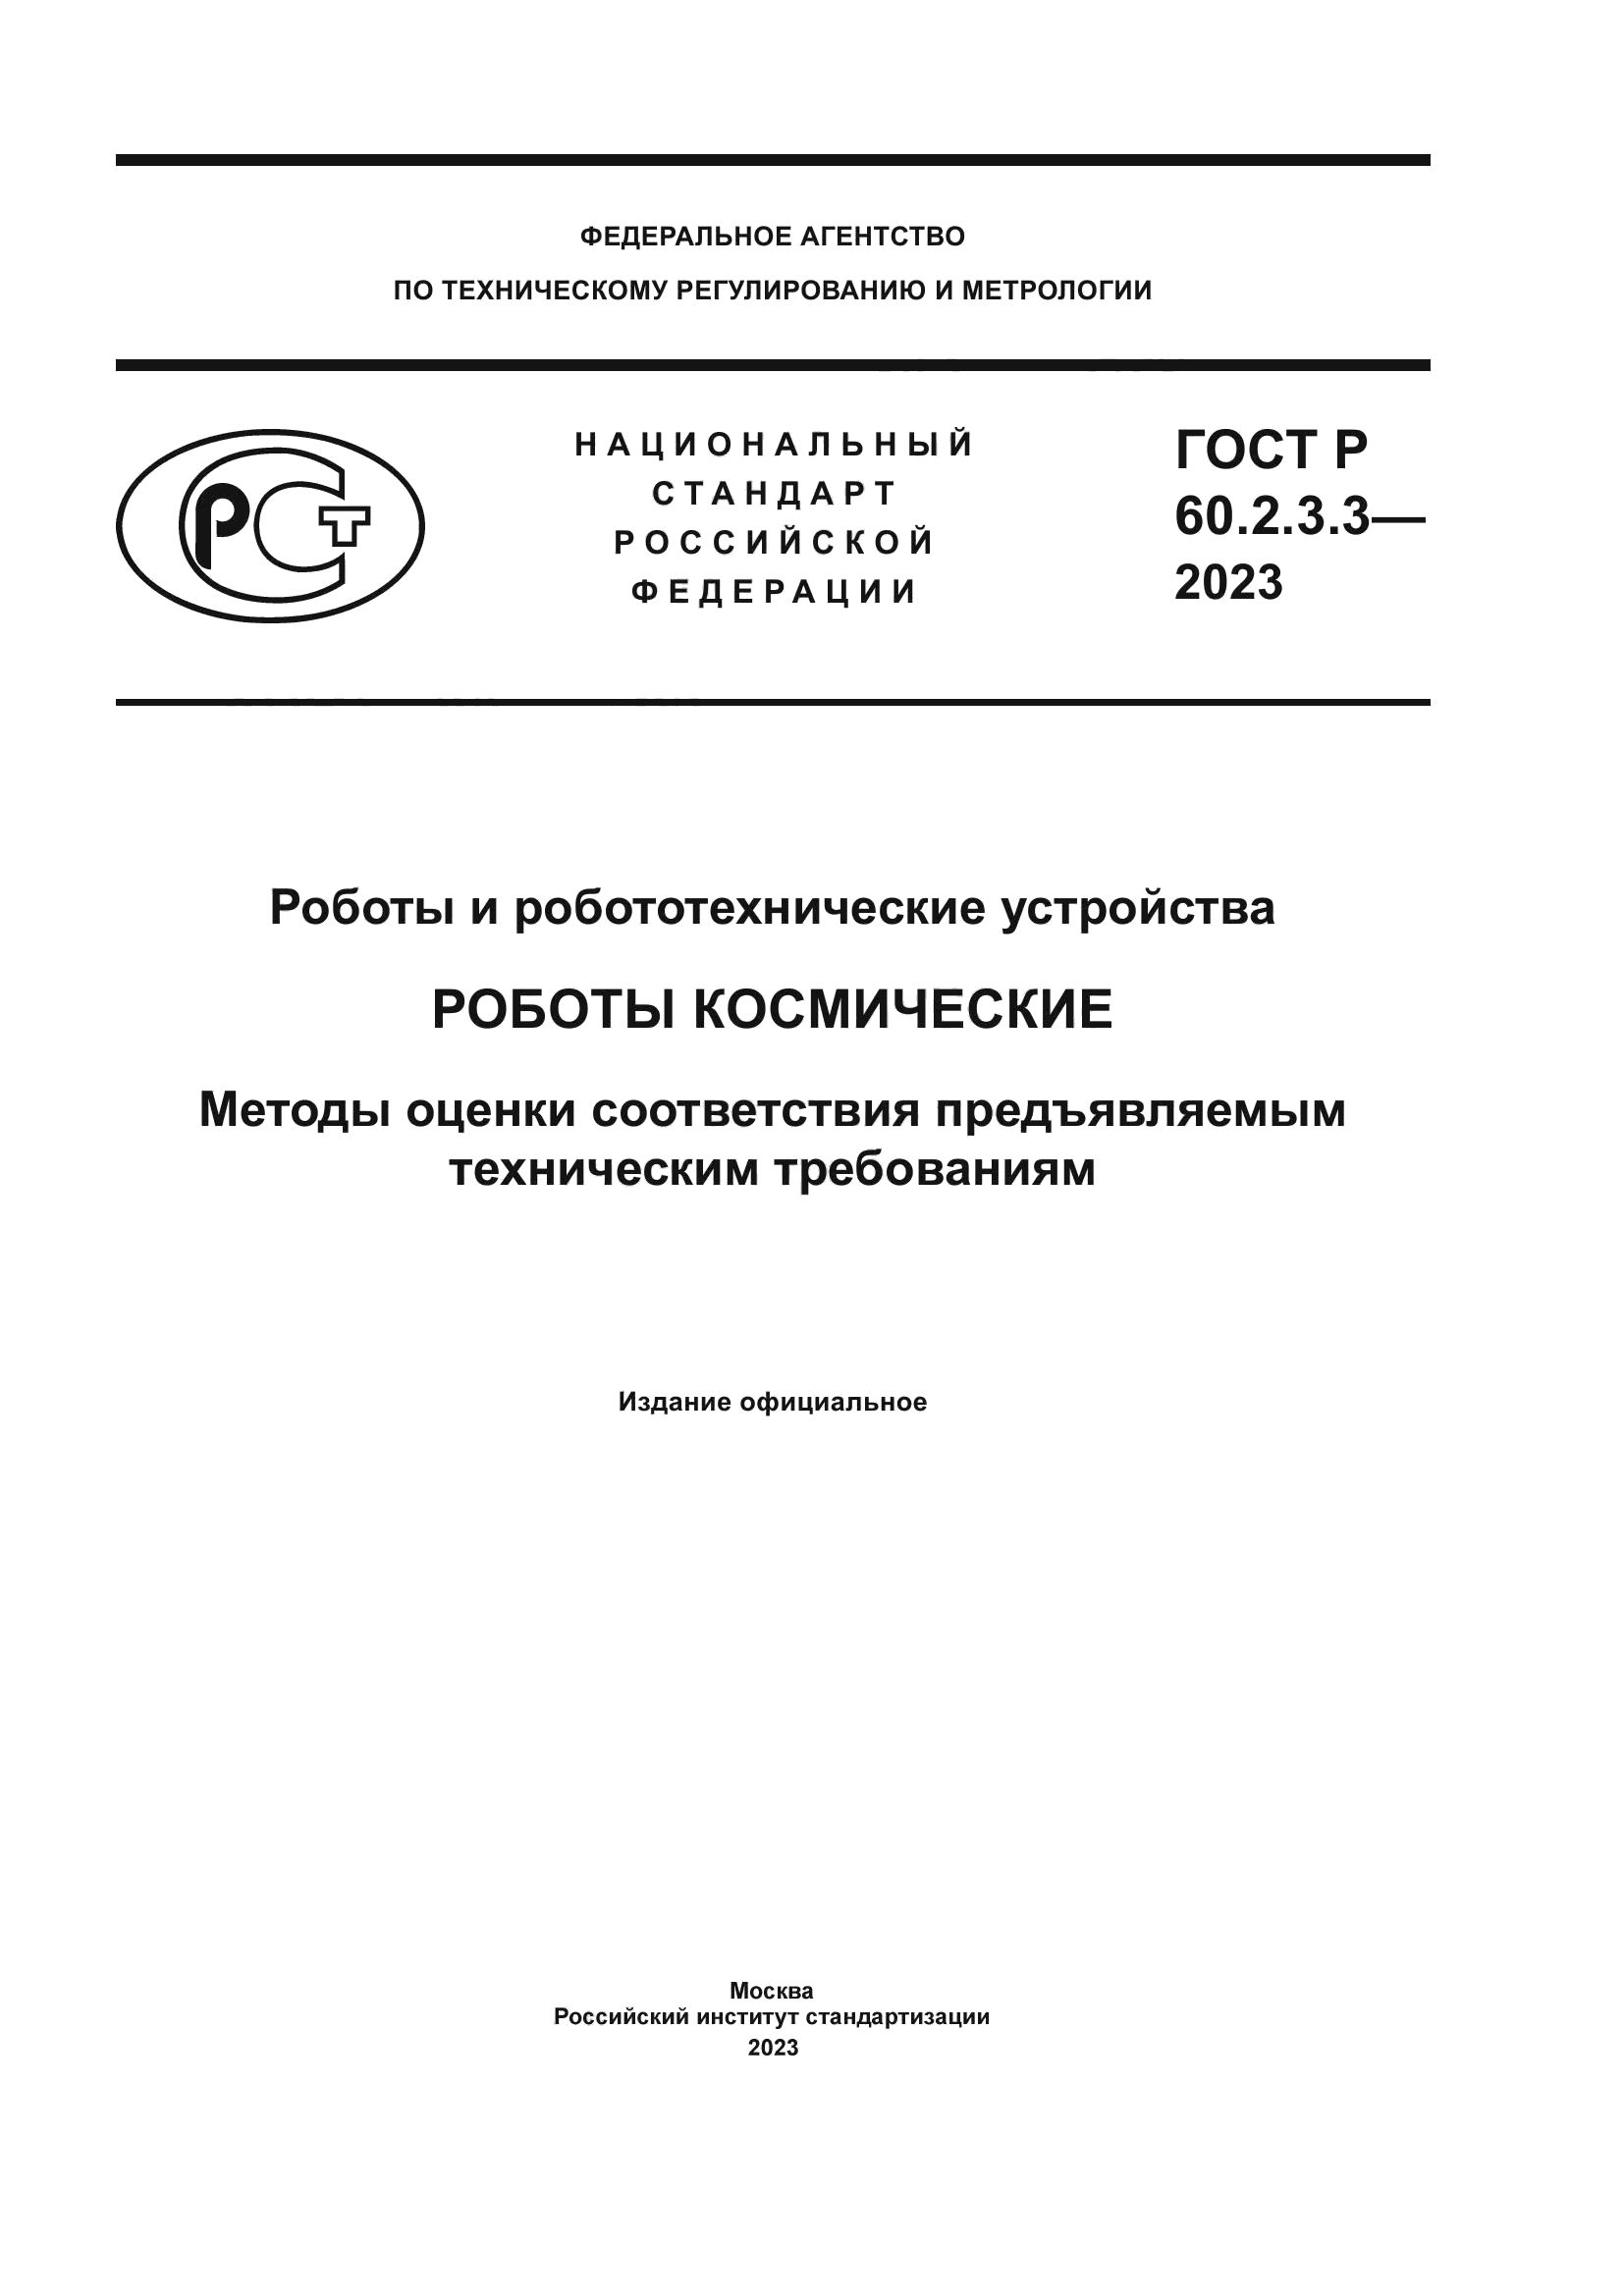 ГОСТ Р 60.2.3.3-2023